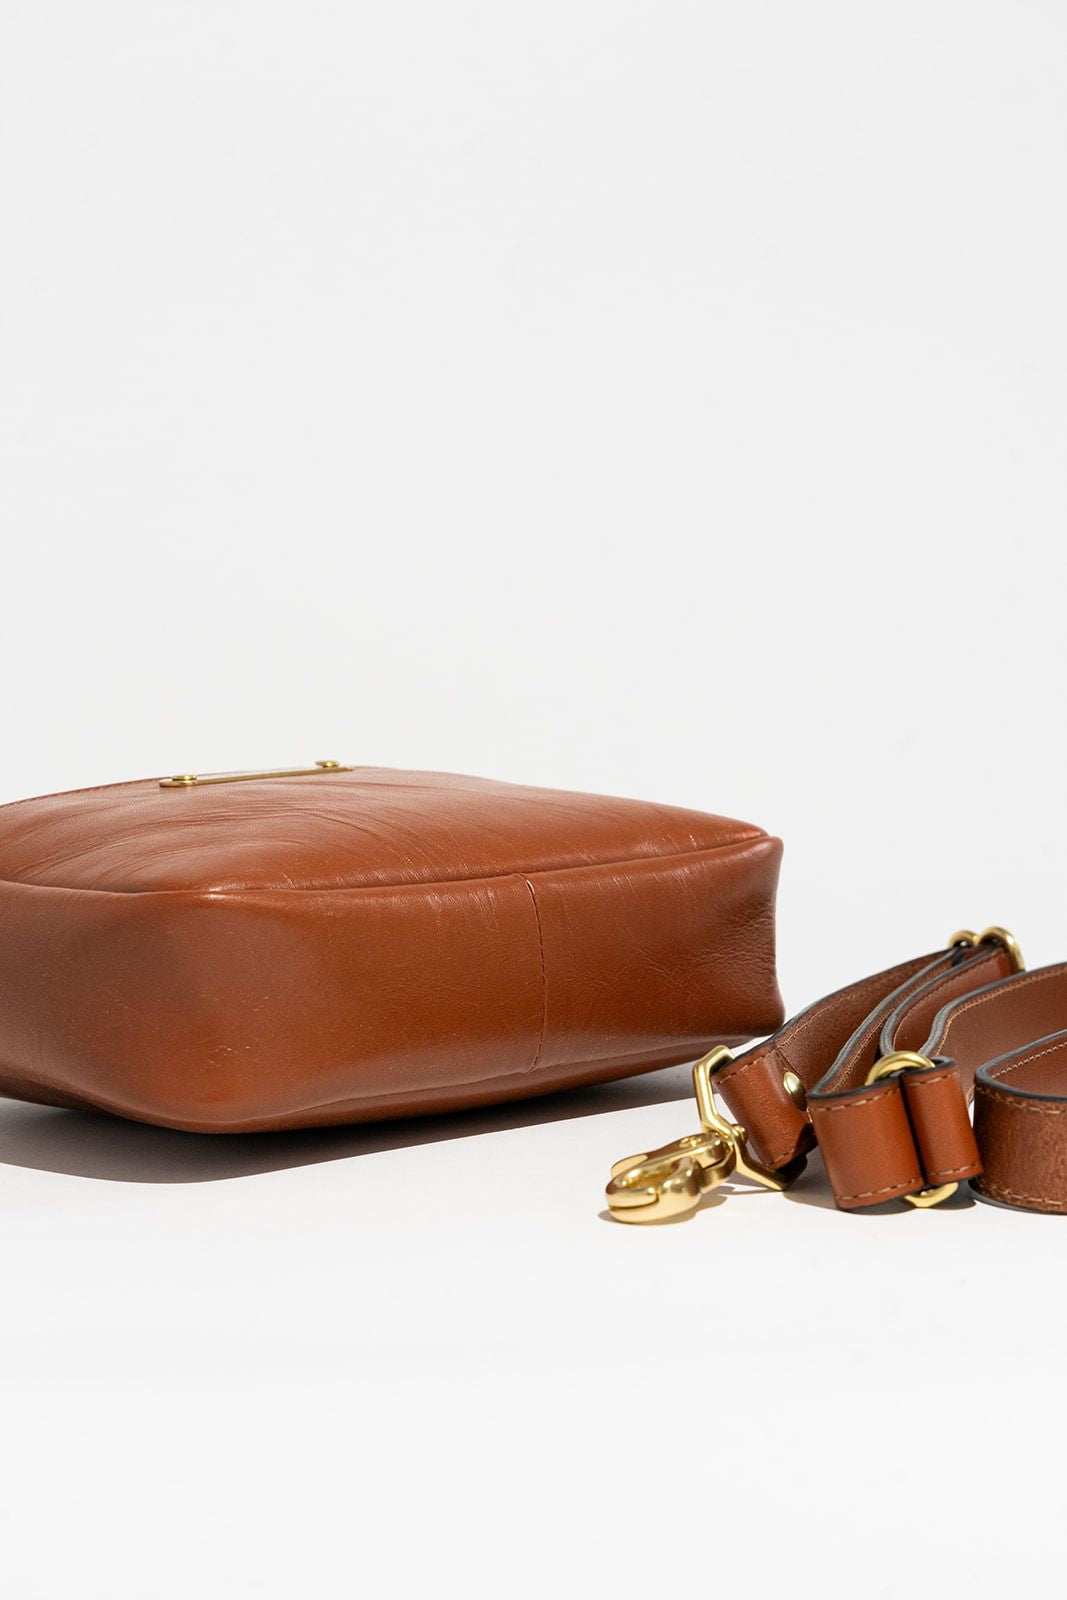 Jane | Premium Tan Leather Handbag